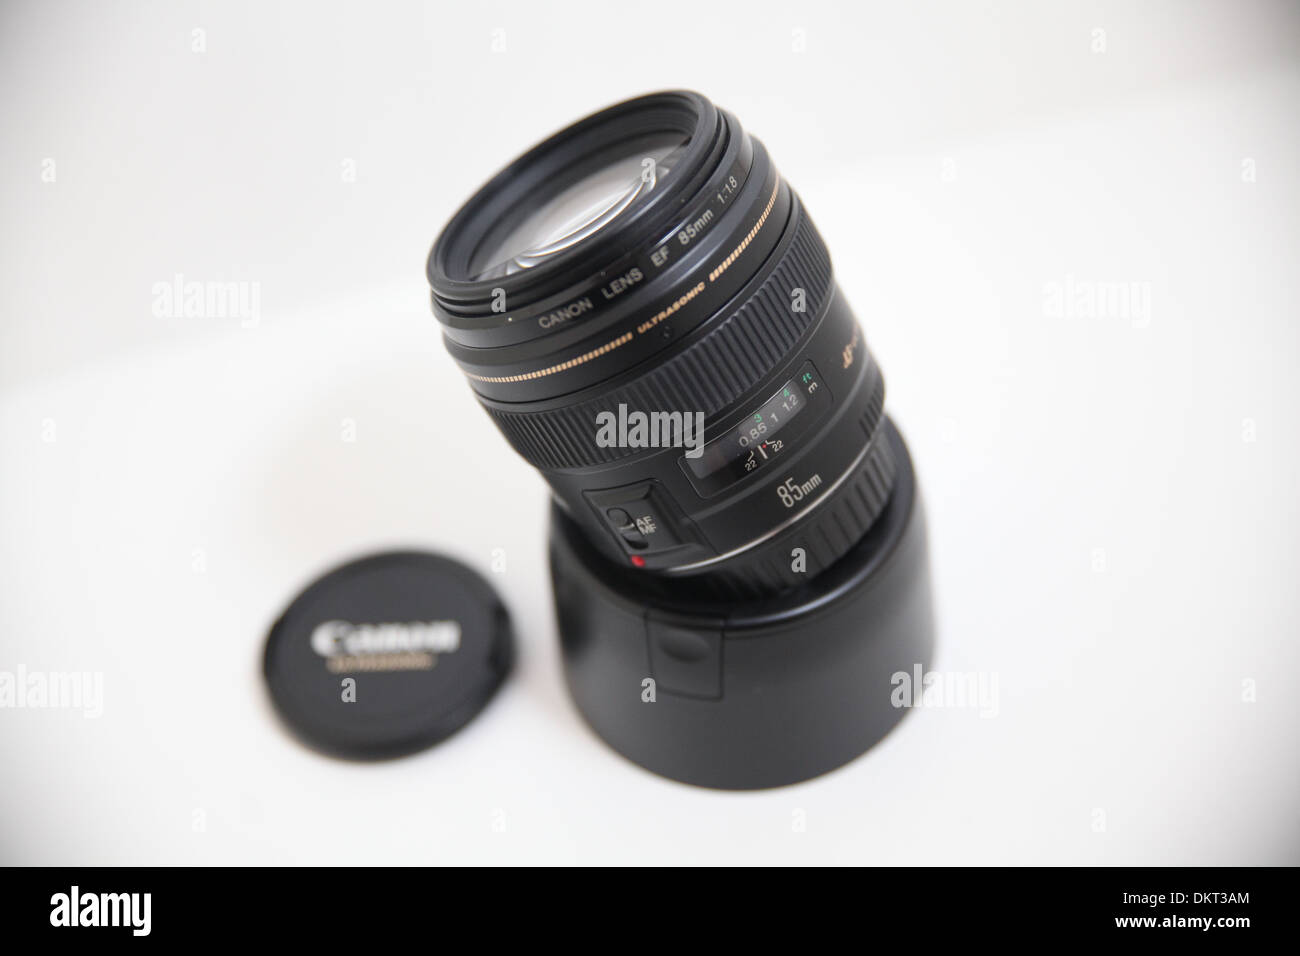 Canon camera lens 85 1.8 Stock Photo